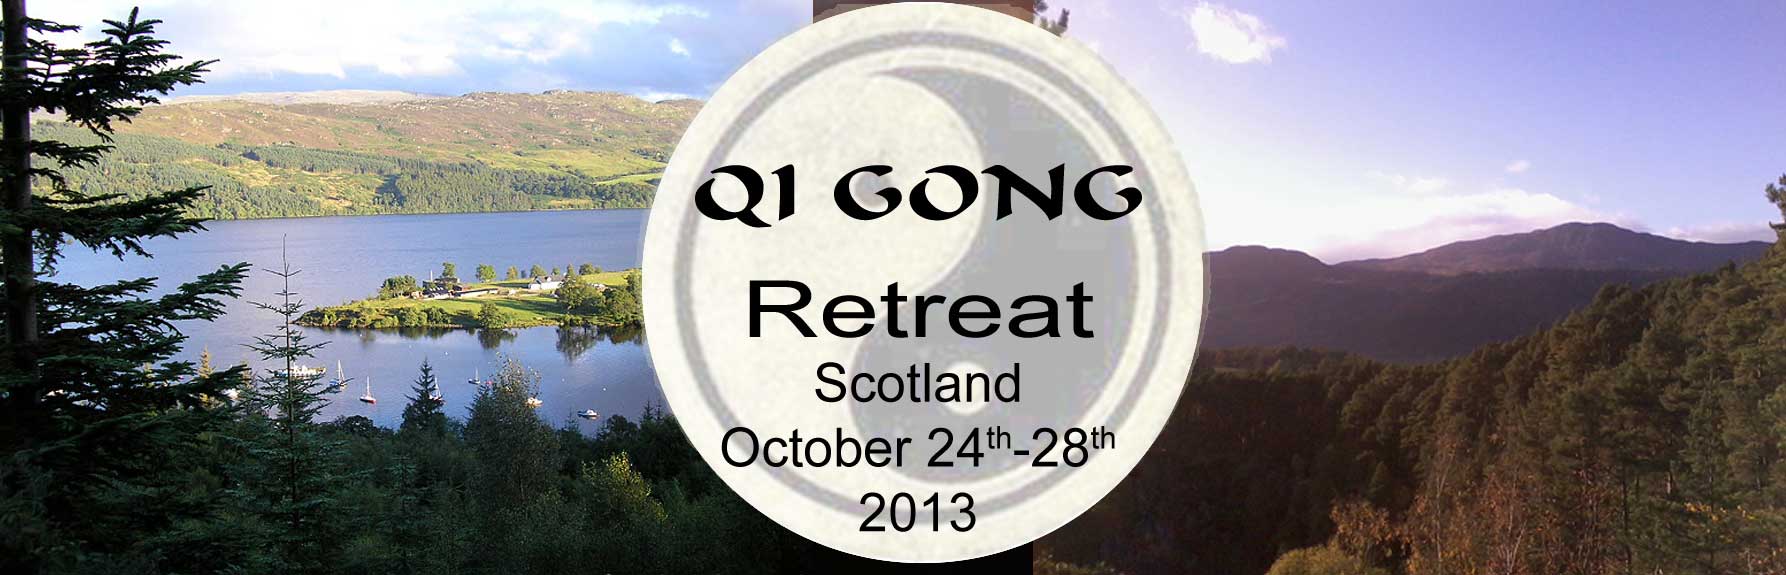 QI GONG RETREAT 24th - 28th October 2013